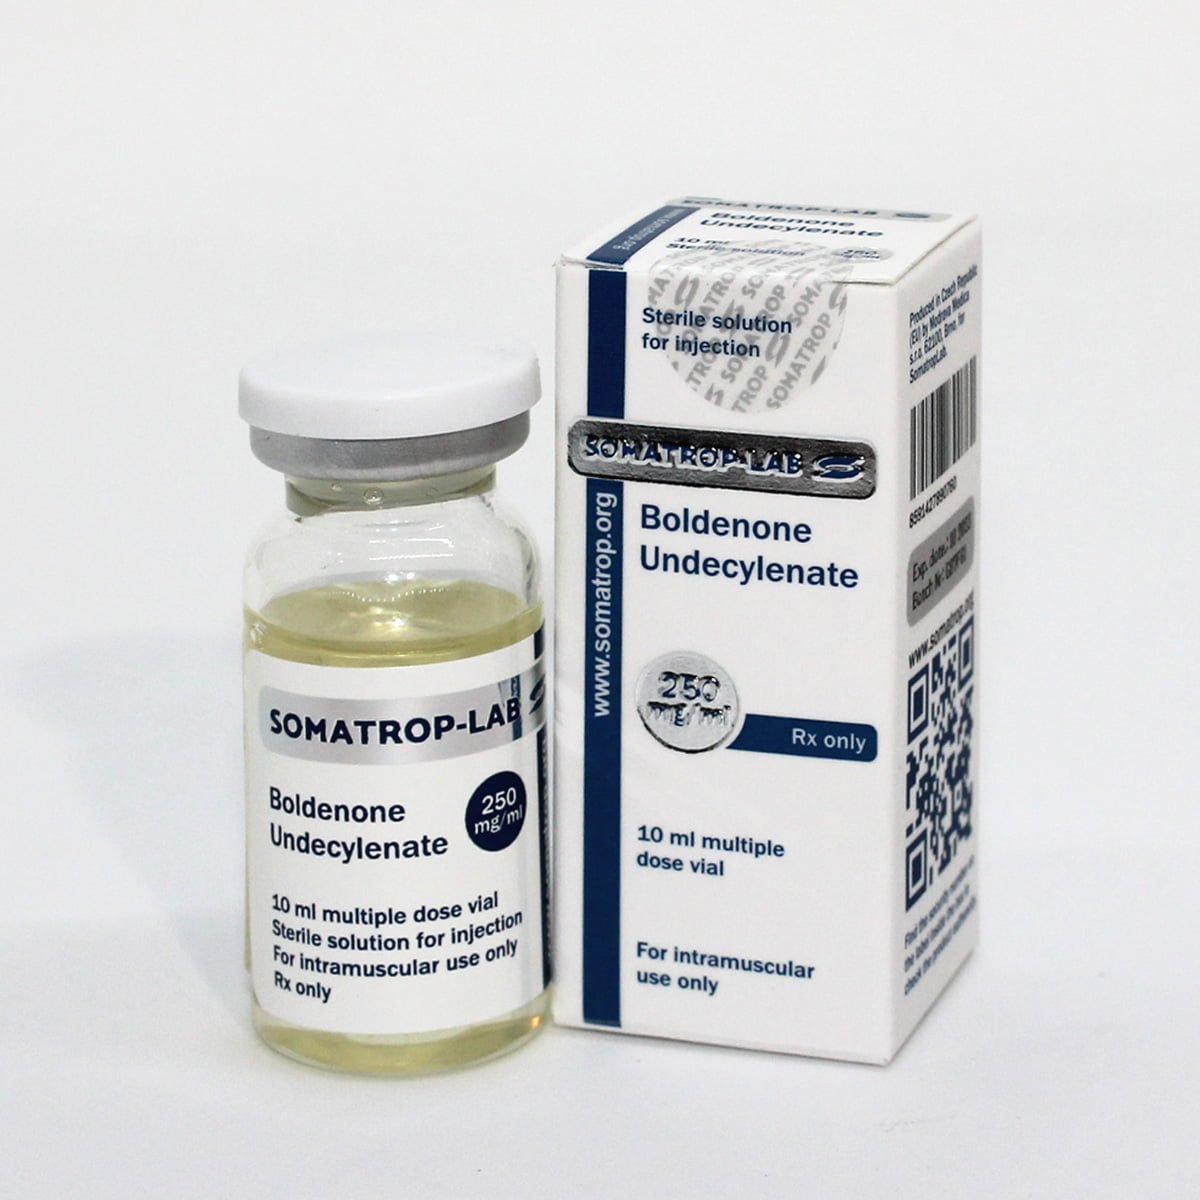 Somatrop-Lab Boldenone Undecylenate